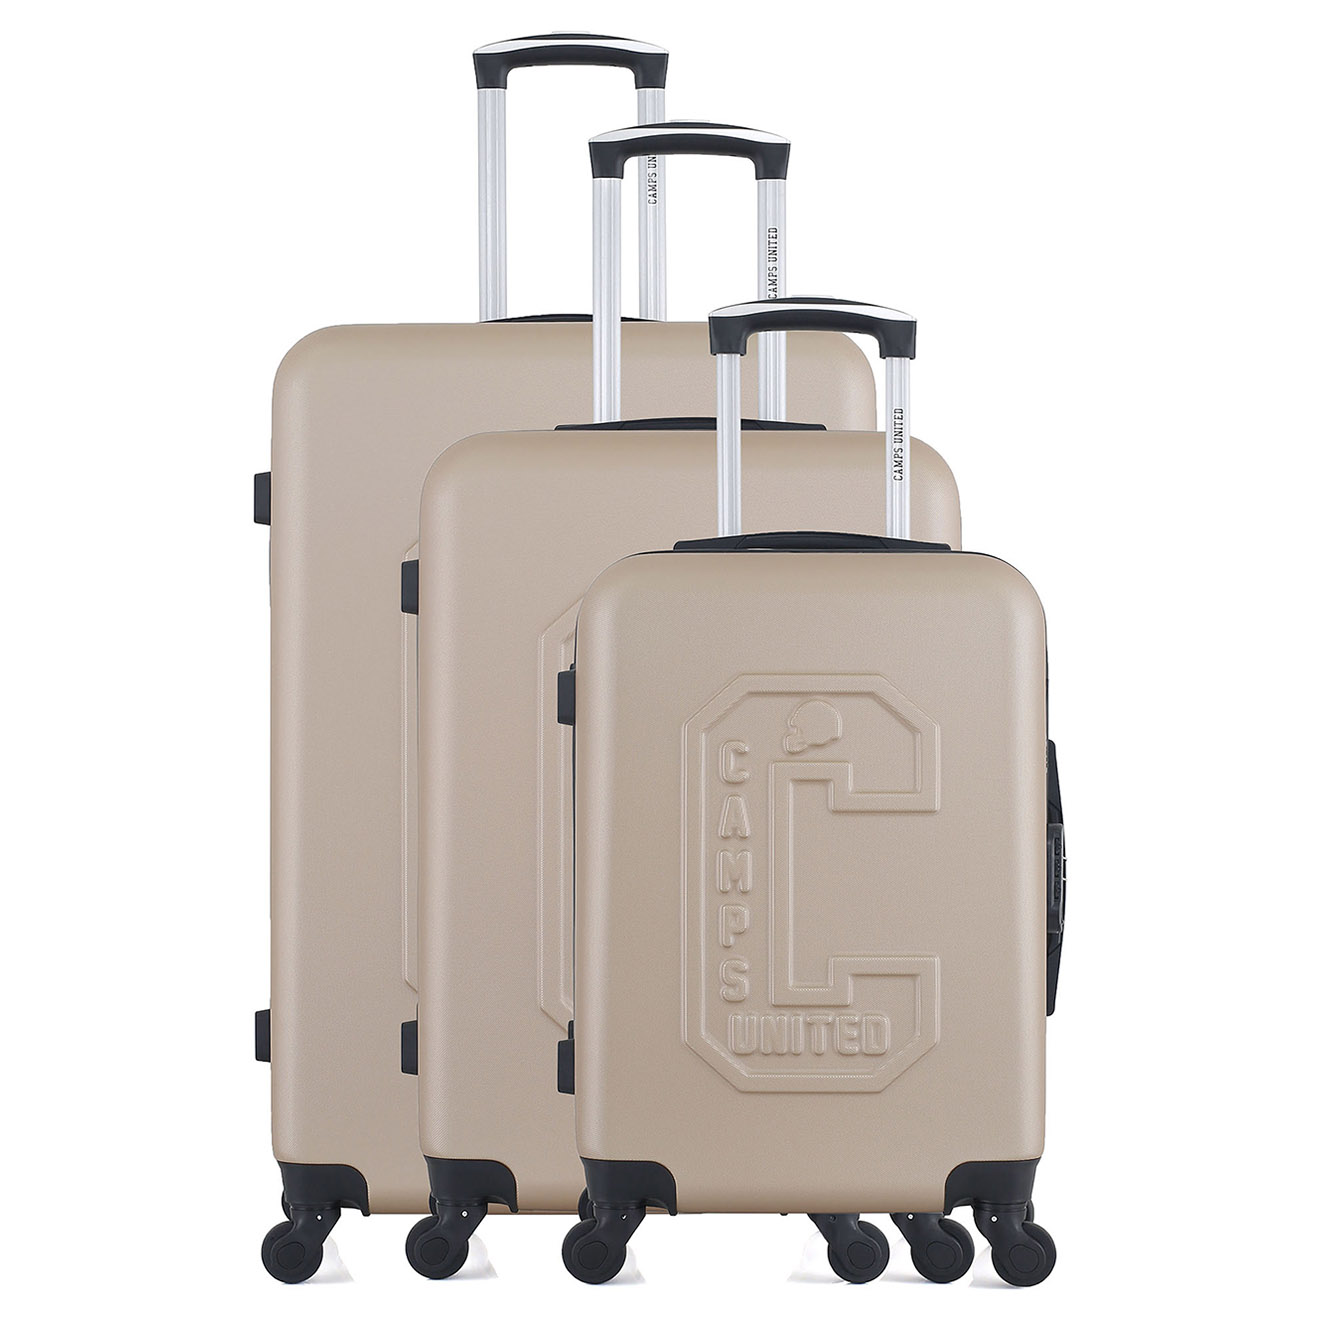 camps united - 3 valises 4 roues simples ucla 75/65/55 cm beiges